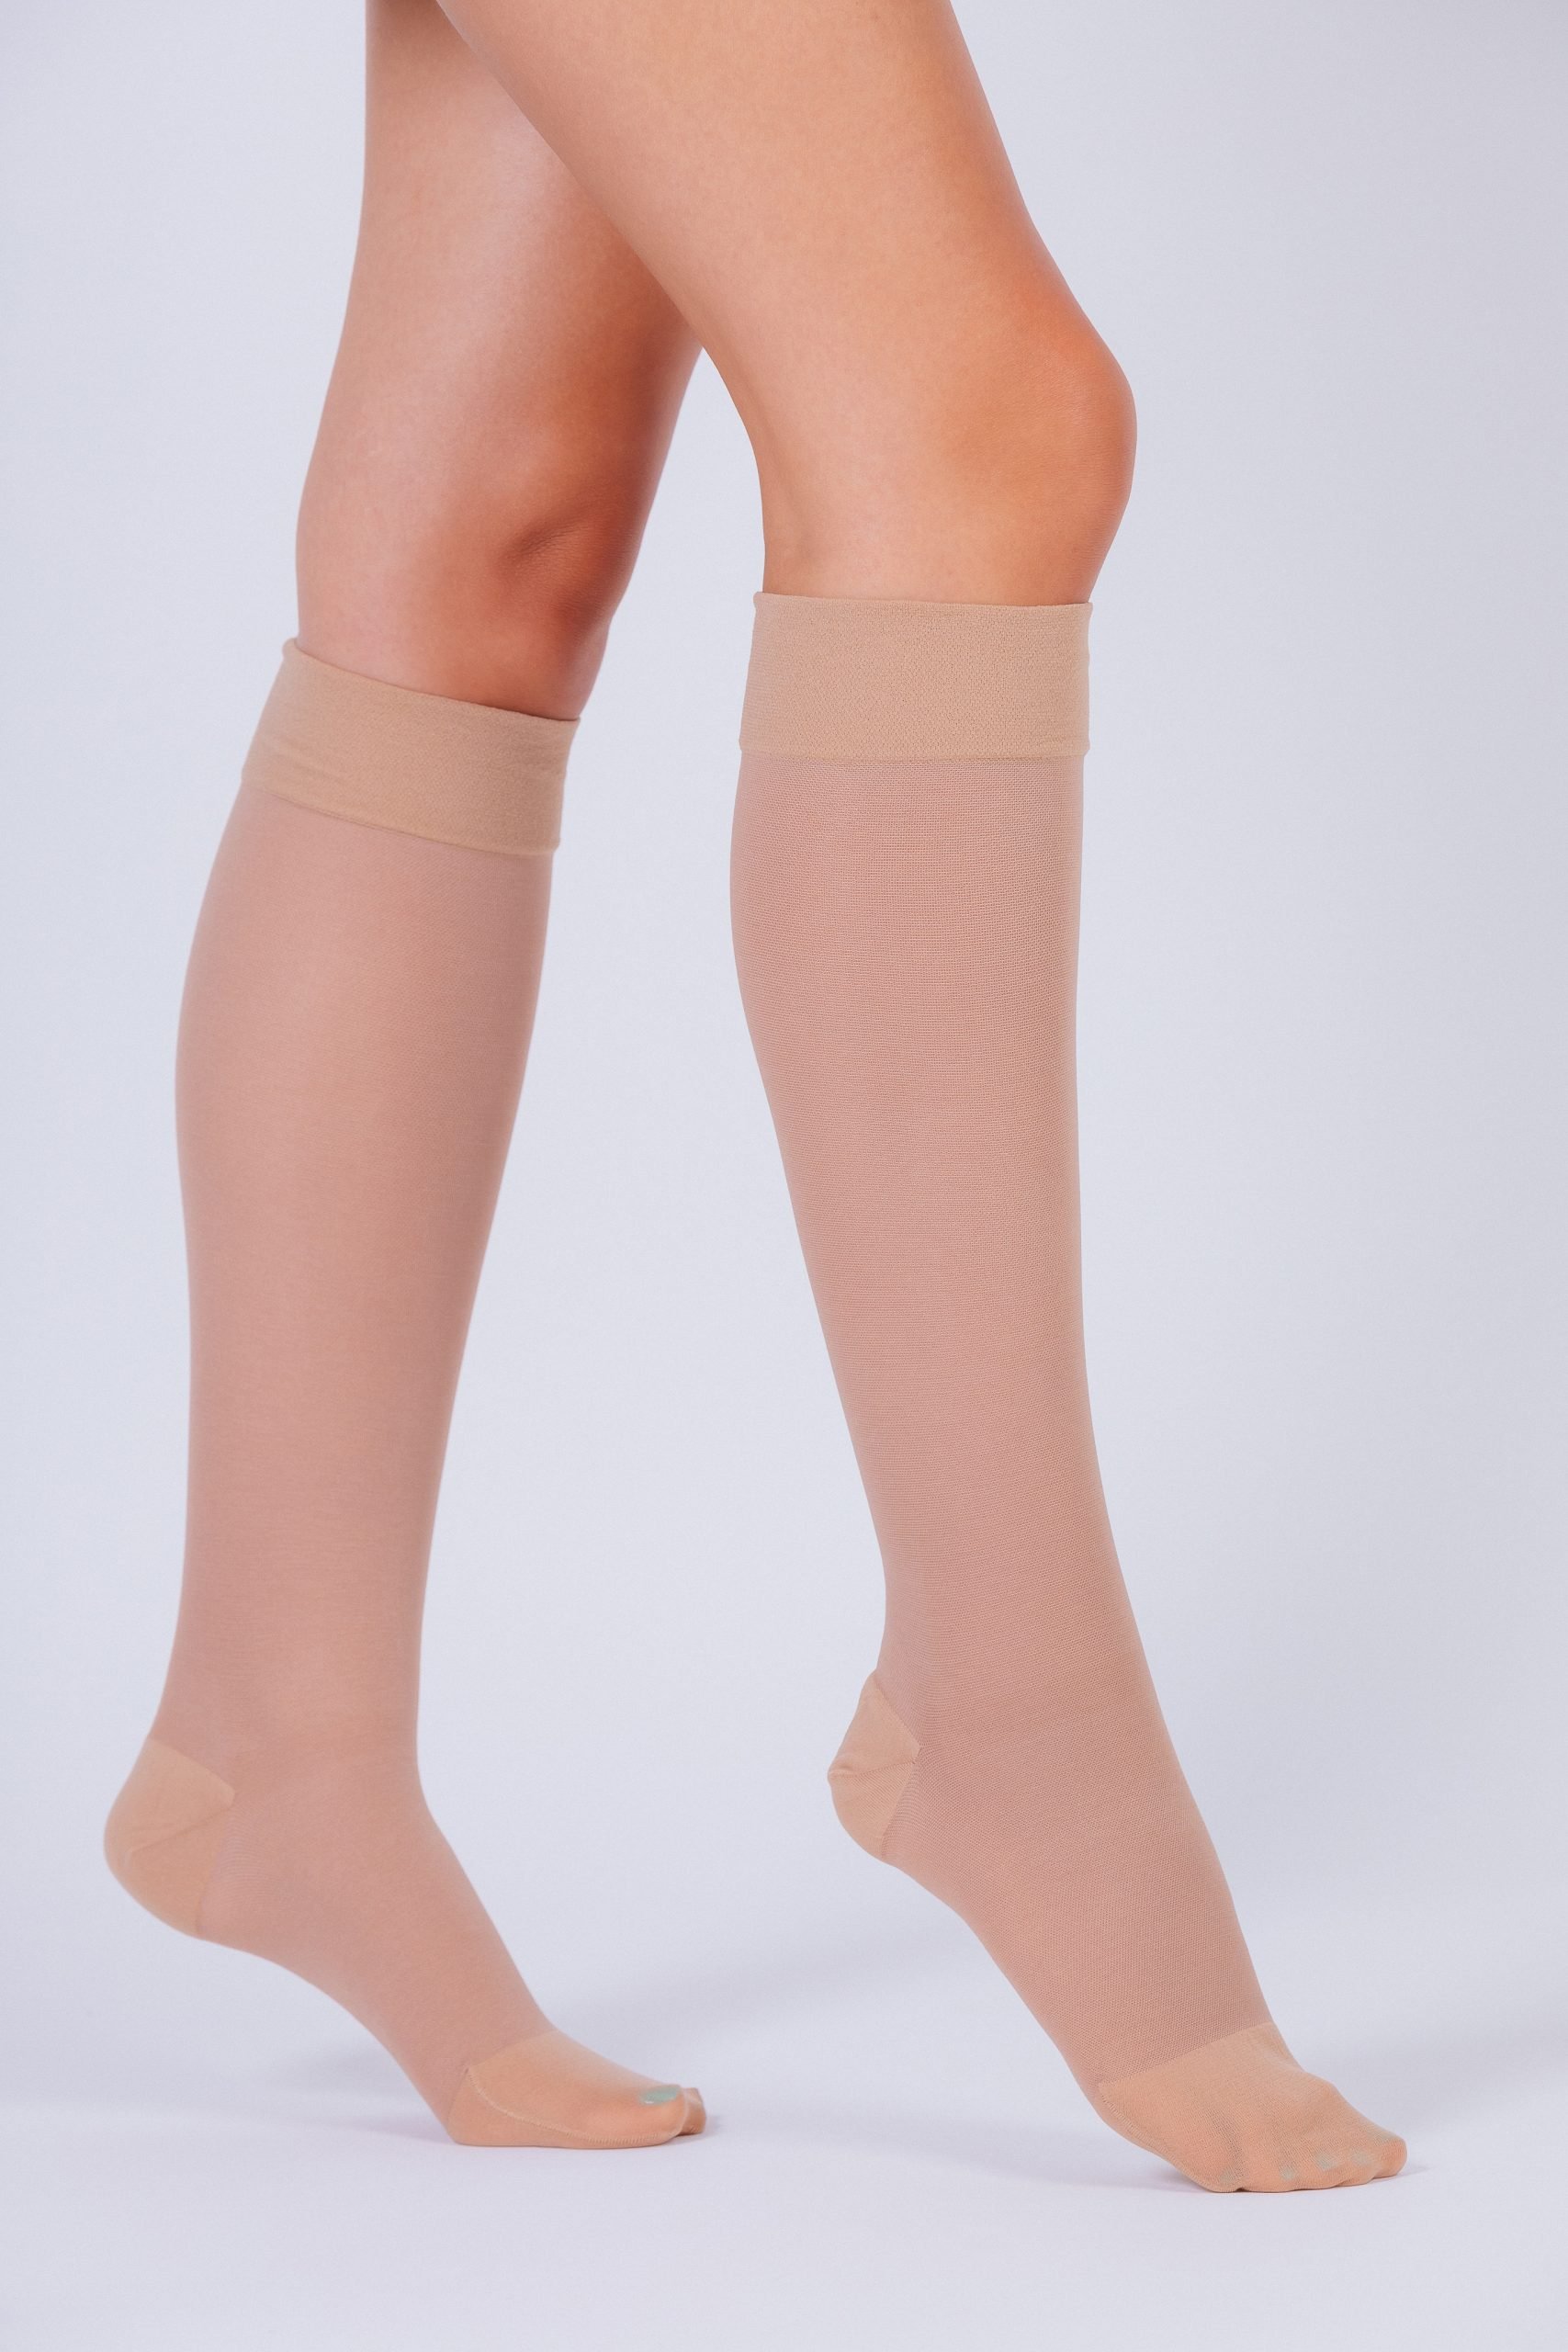 Ciorapi compresivi medicali pana la genunchi VARILEGS (18-22 MmHg), bej - M